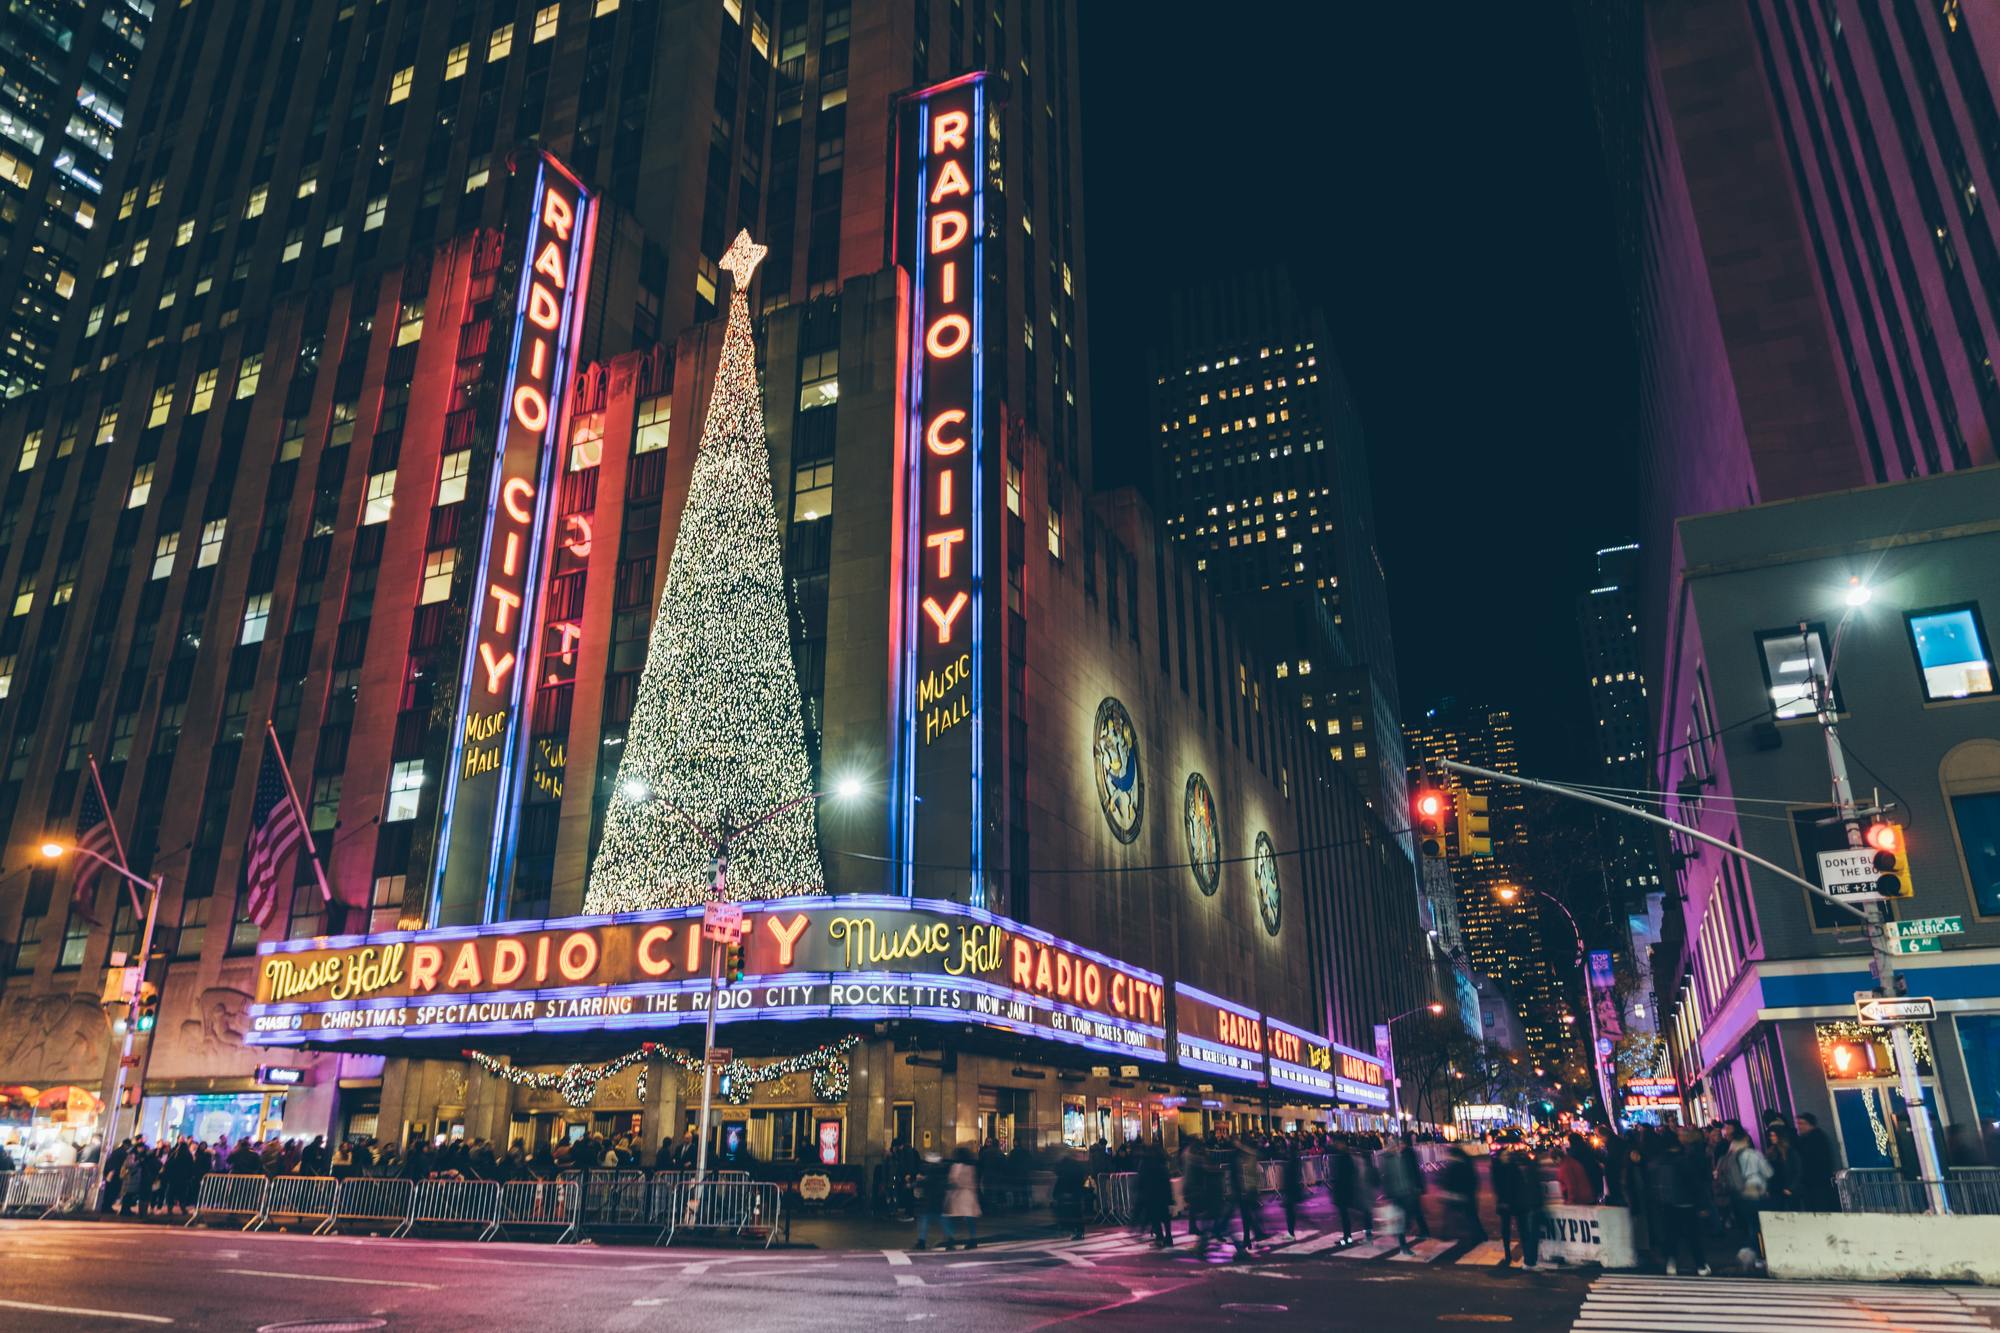 Radio City Christmas Spectacular returns!